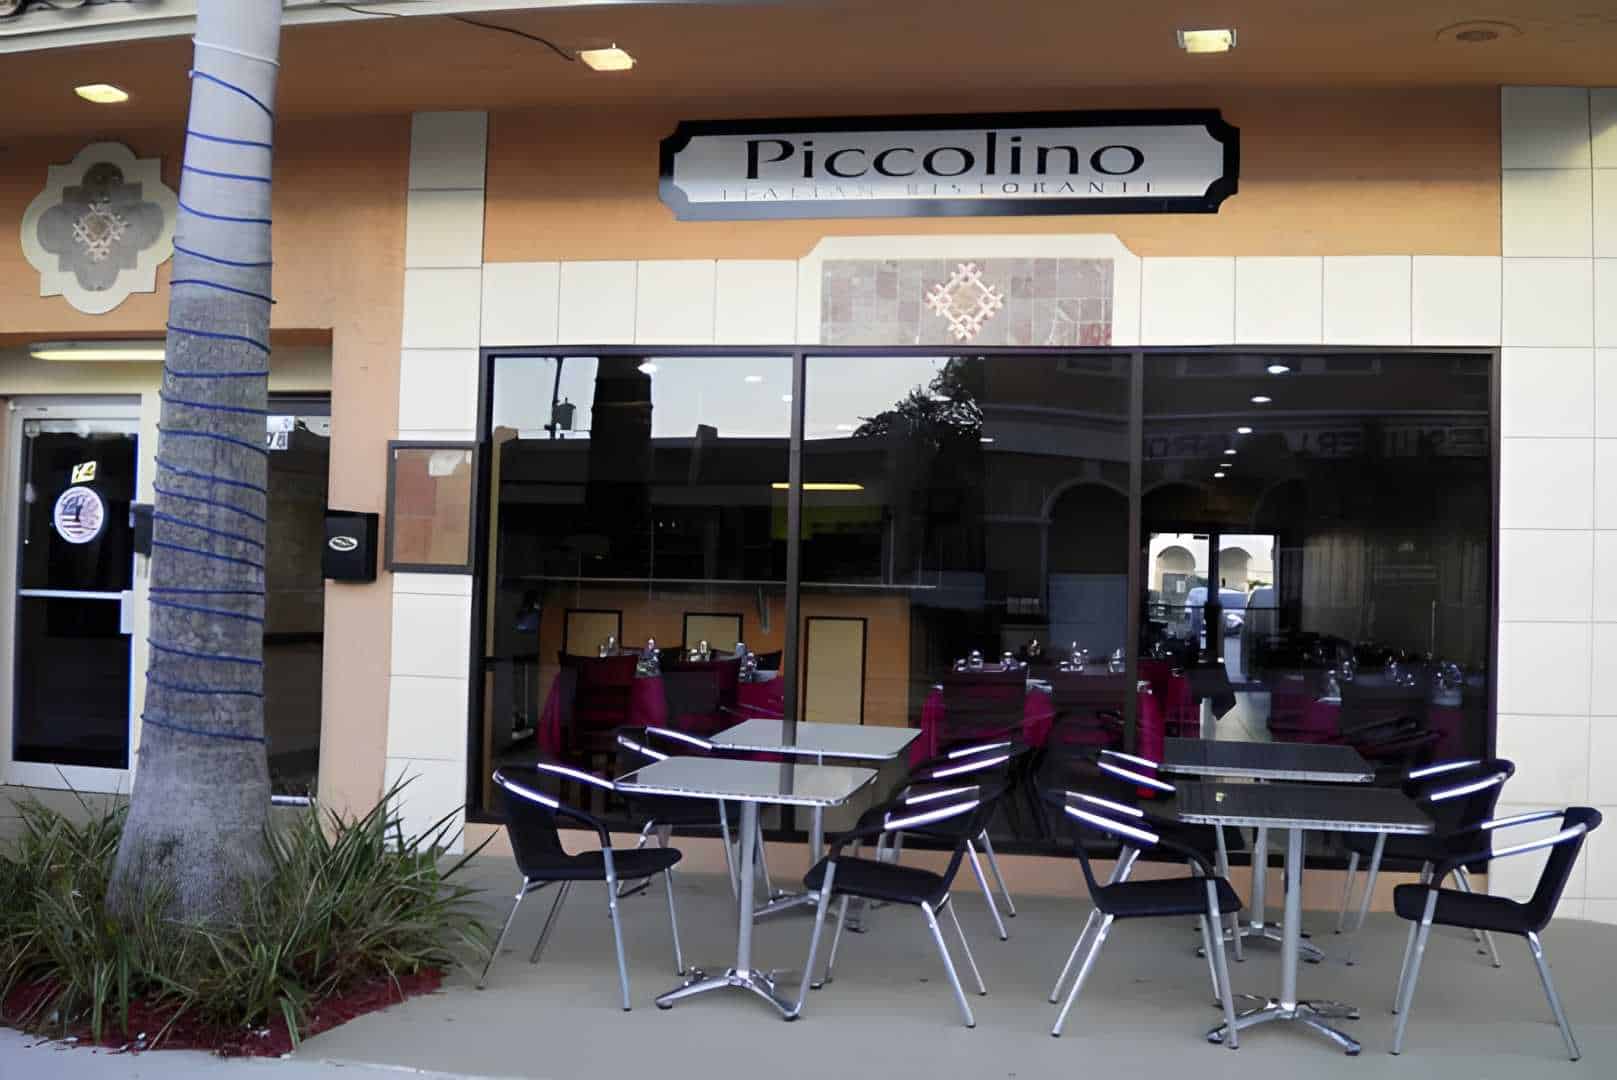 Piccolino Best Italian Restaurants in Boca Raton, FL